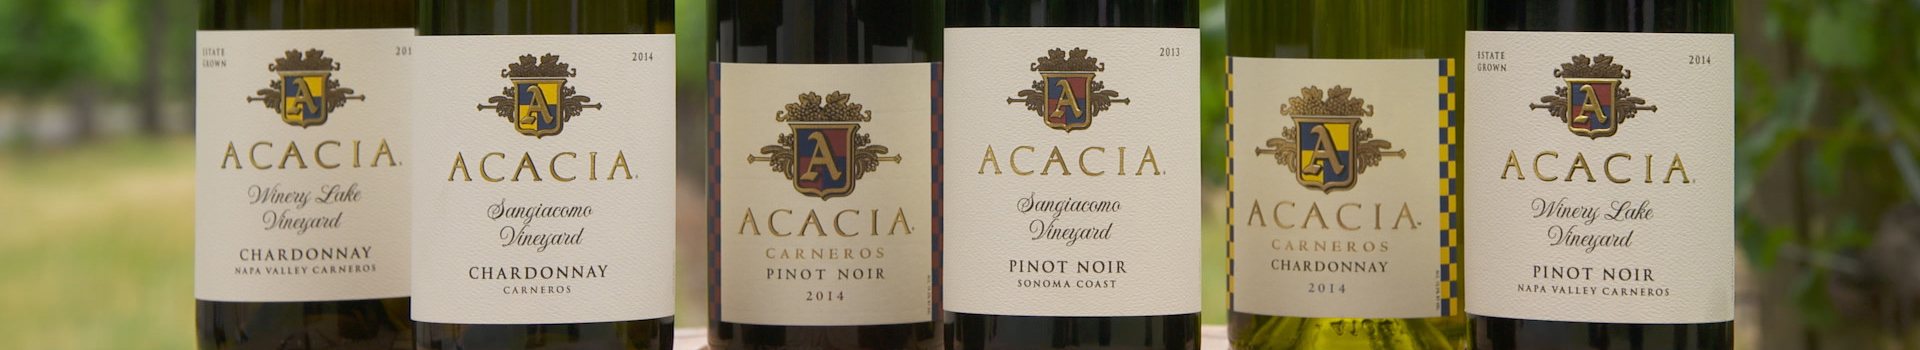 Acacia Wines